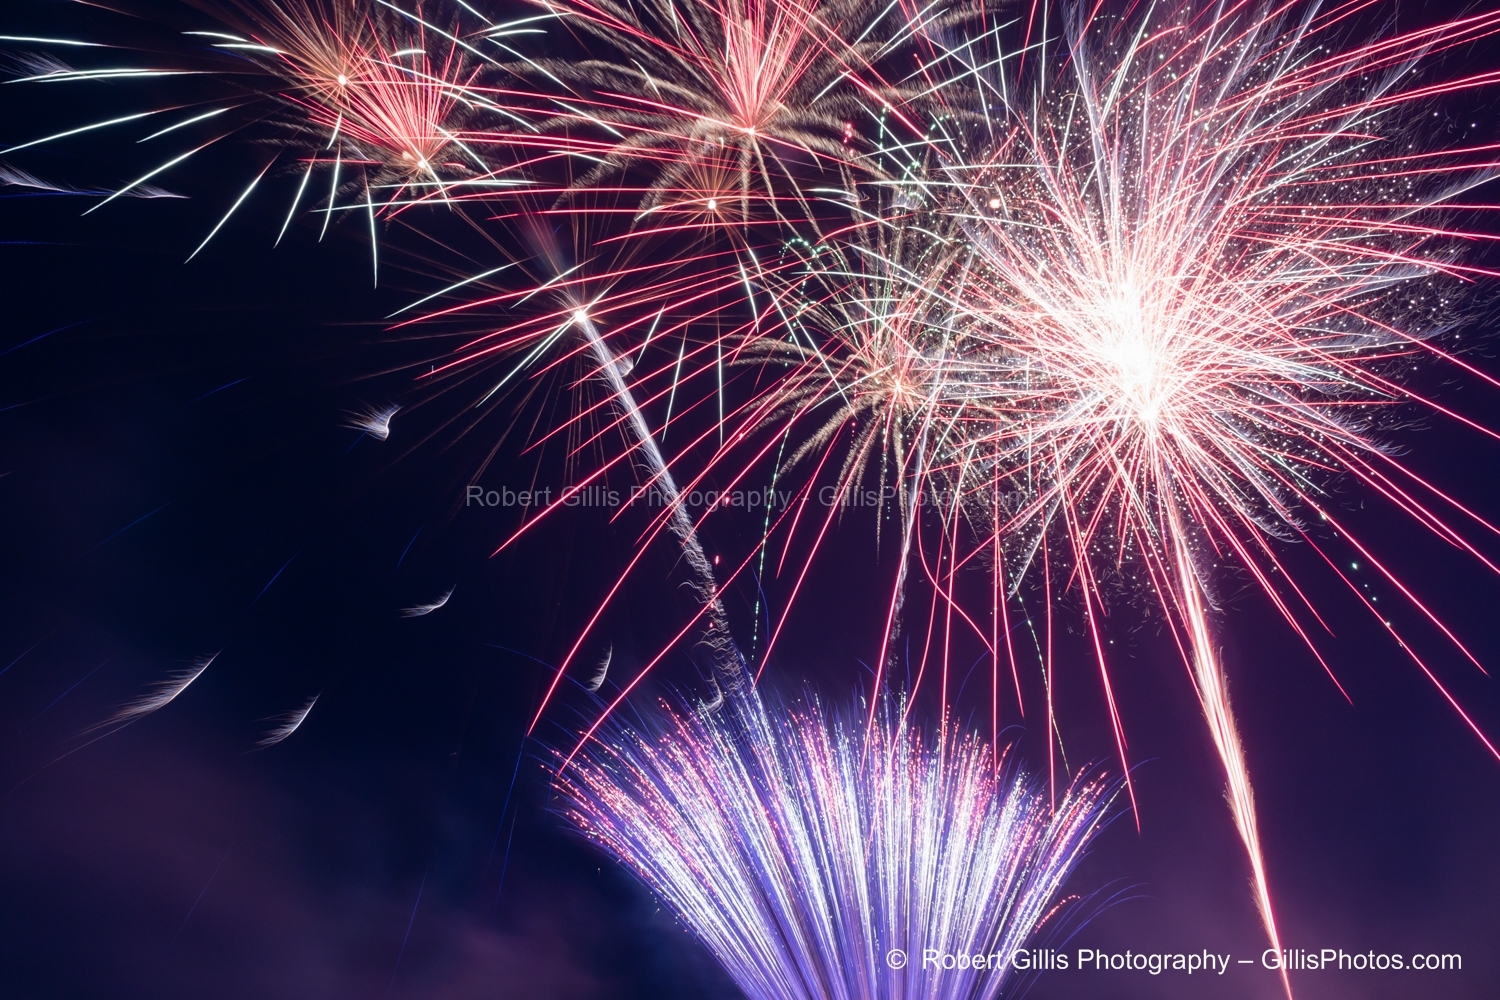 076 Fireworks Display - Ogunquit - Independence Day 2018